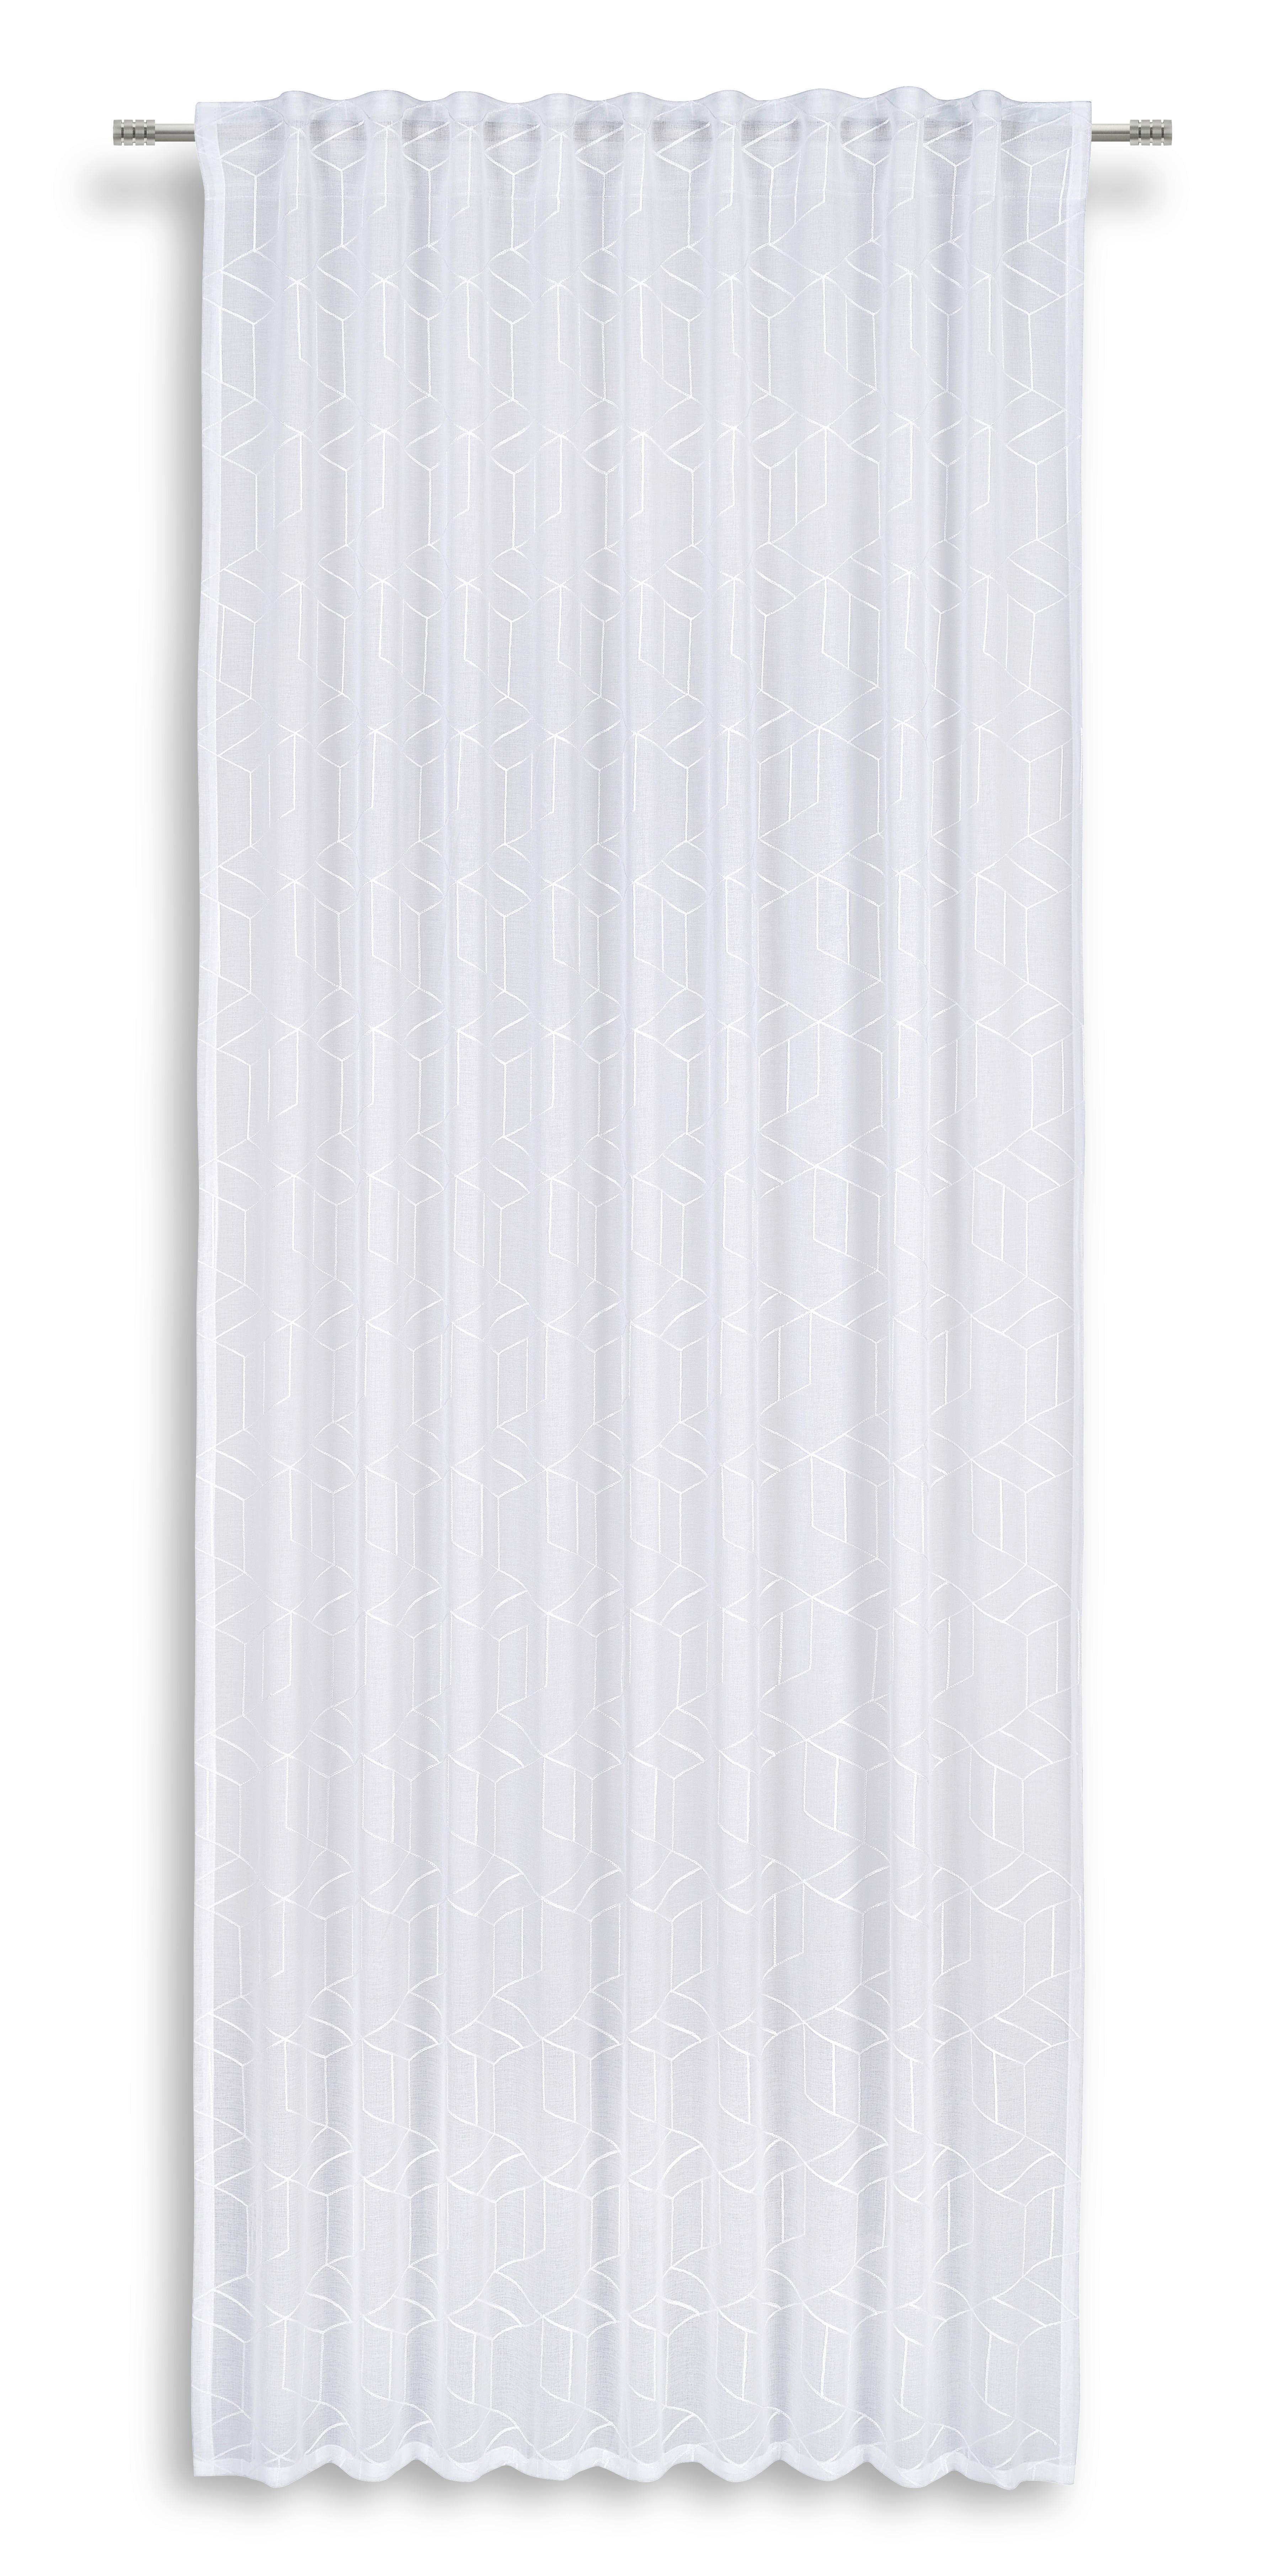 Fertigvorhang Sabina - Weiß, MODERN, Textil (140/245cm) - Luca Bessoni